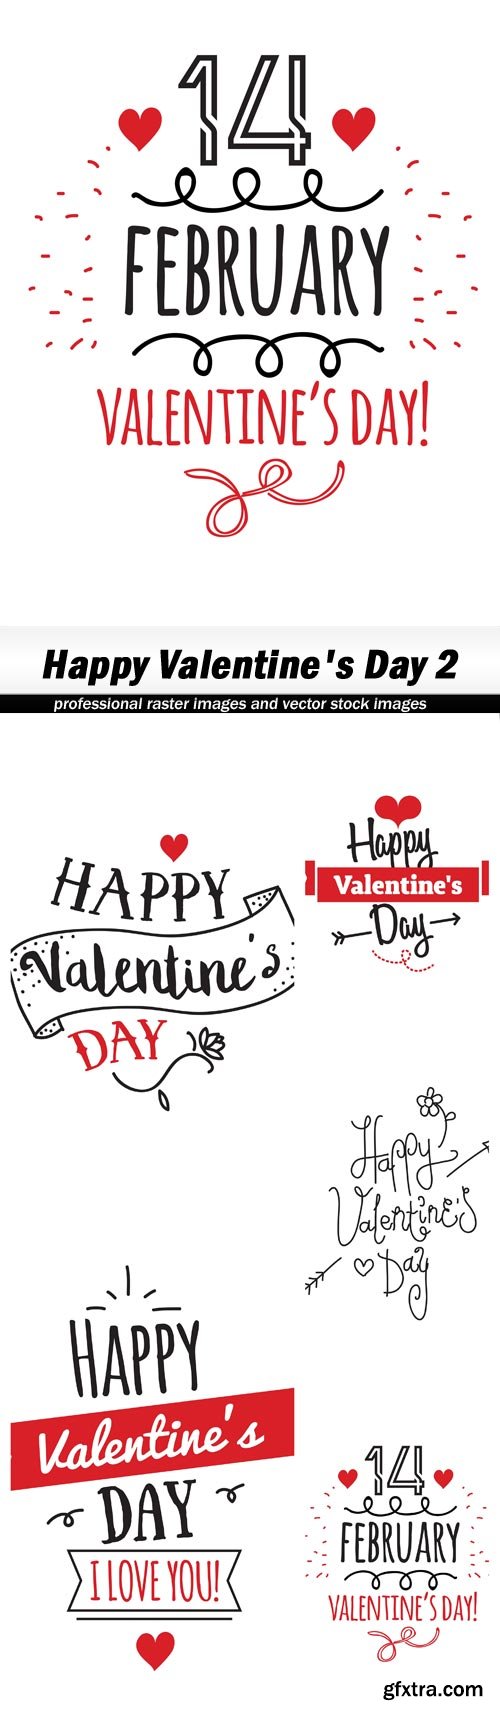 Happy Valentine's Day 2 - 5 EPS